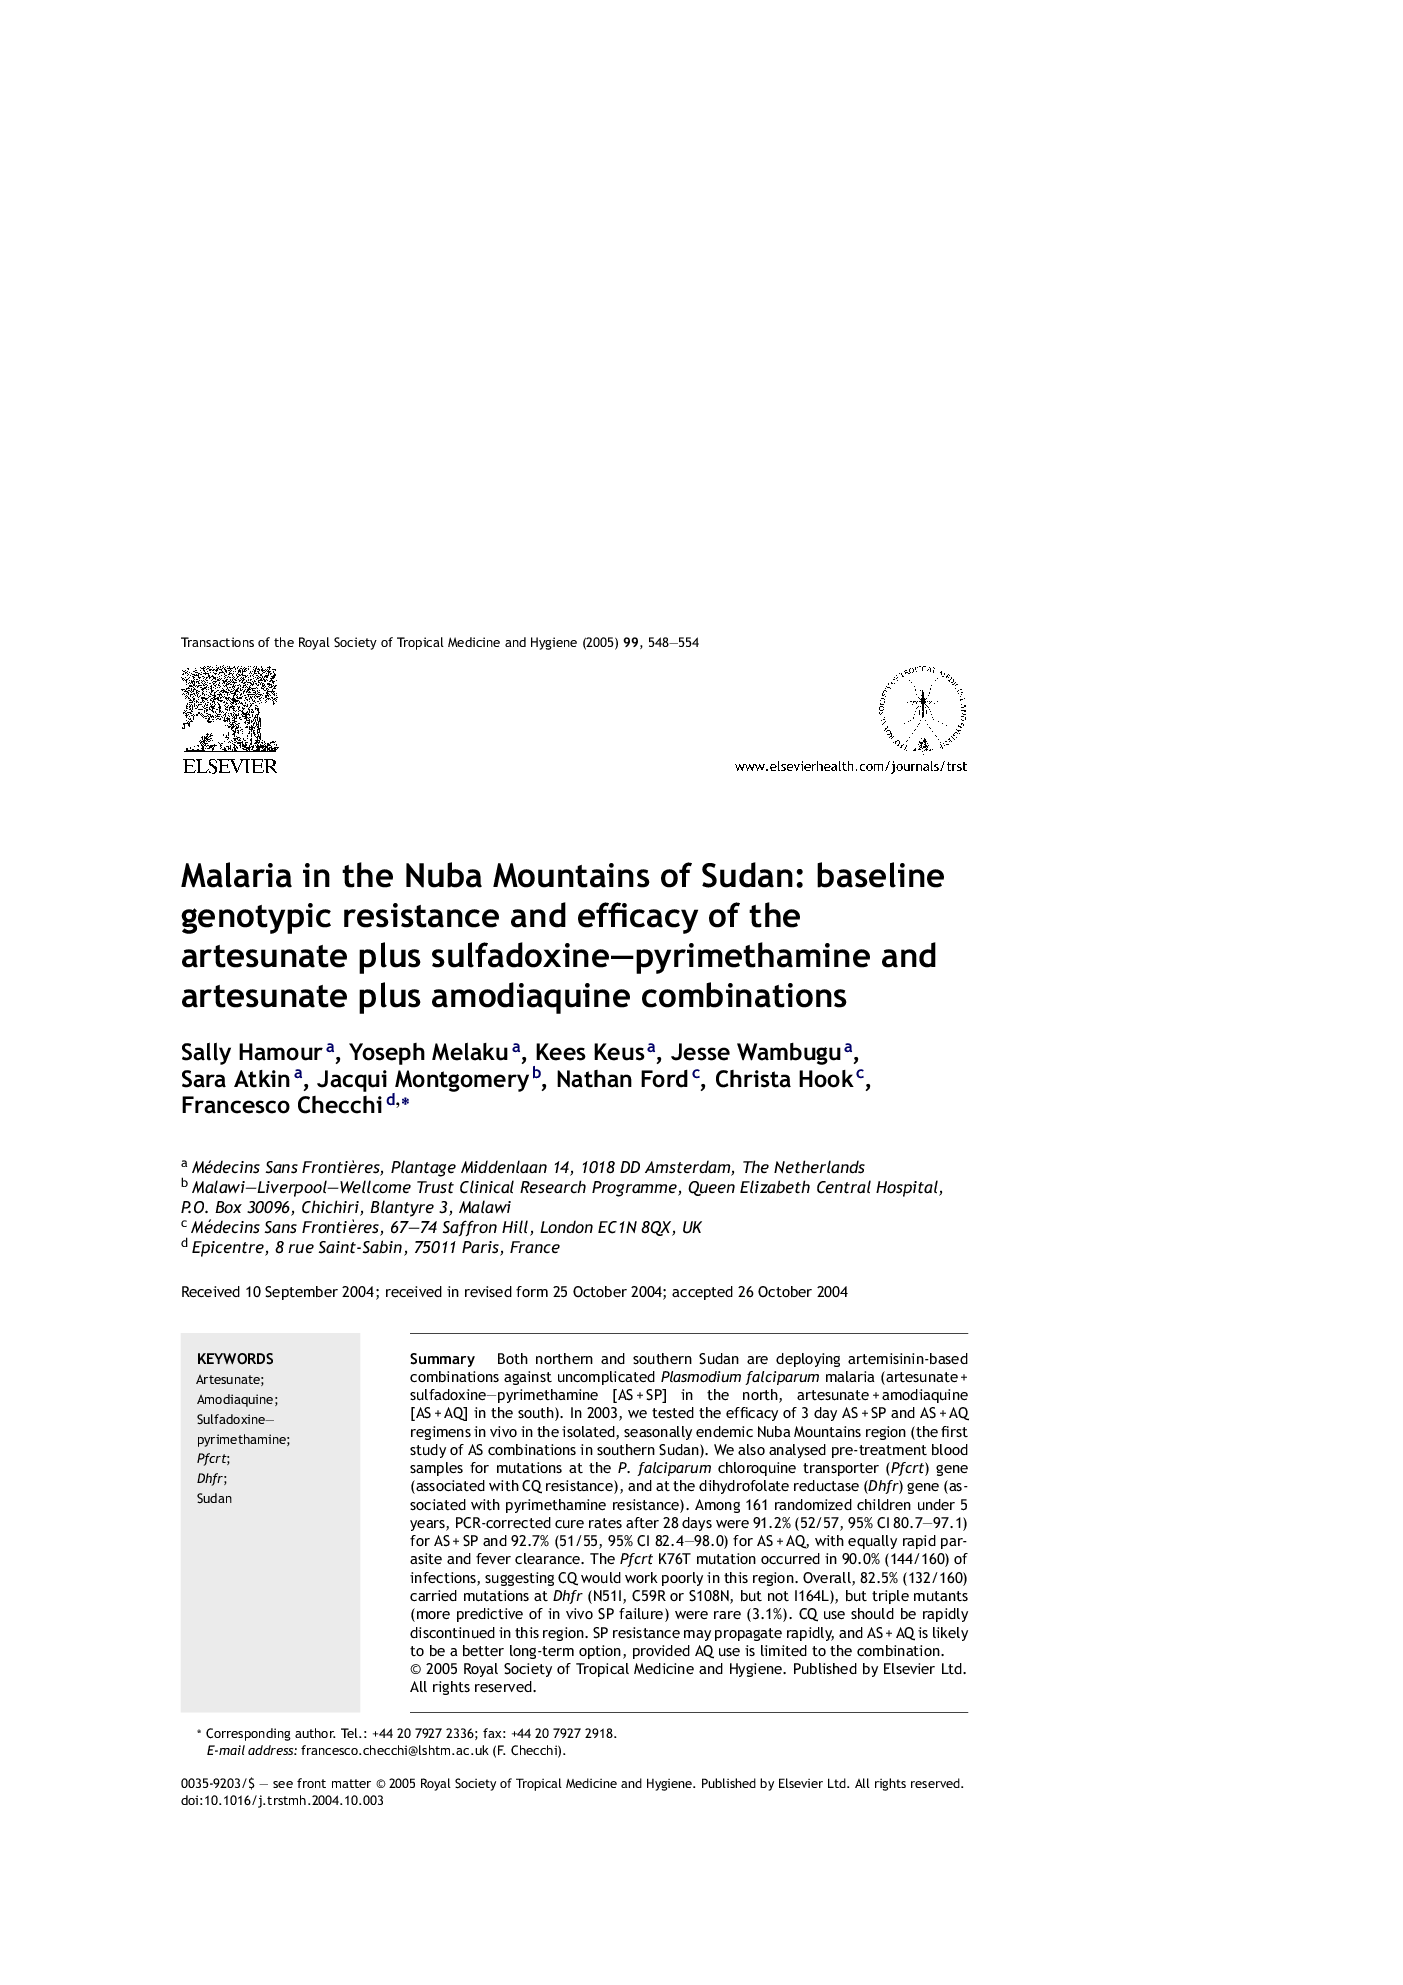 Malaria in the Nuba Mountains of Sudan: baseline genotypic resistance and efficacy of the artesunate plus sulfadoxine-pyrimethamine and artesunate plus amodiaquine combinations